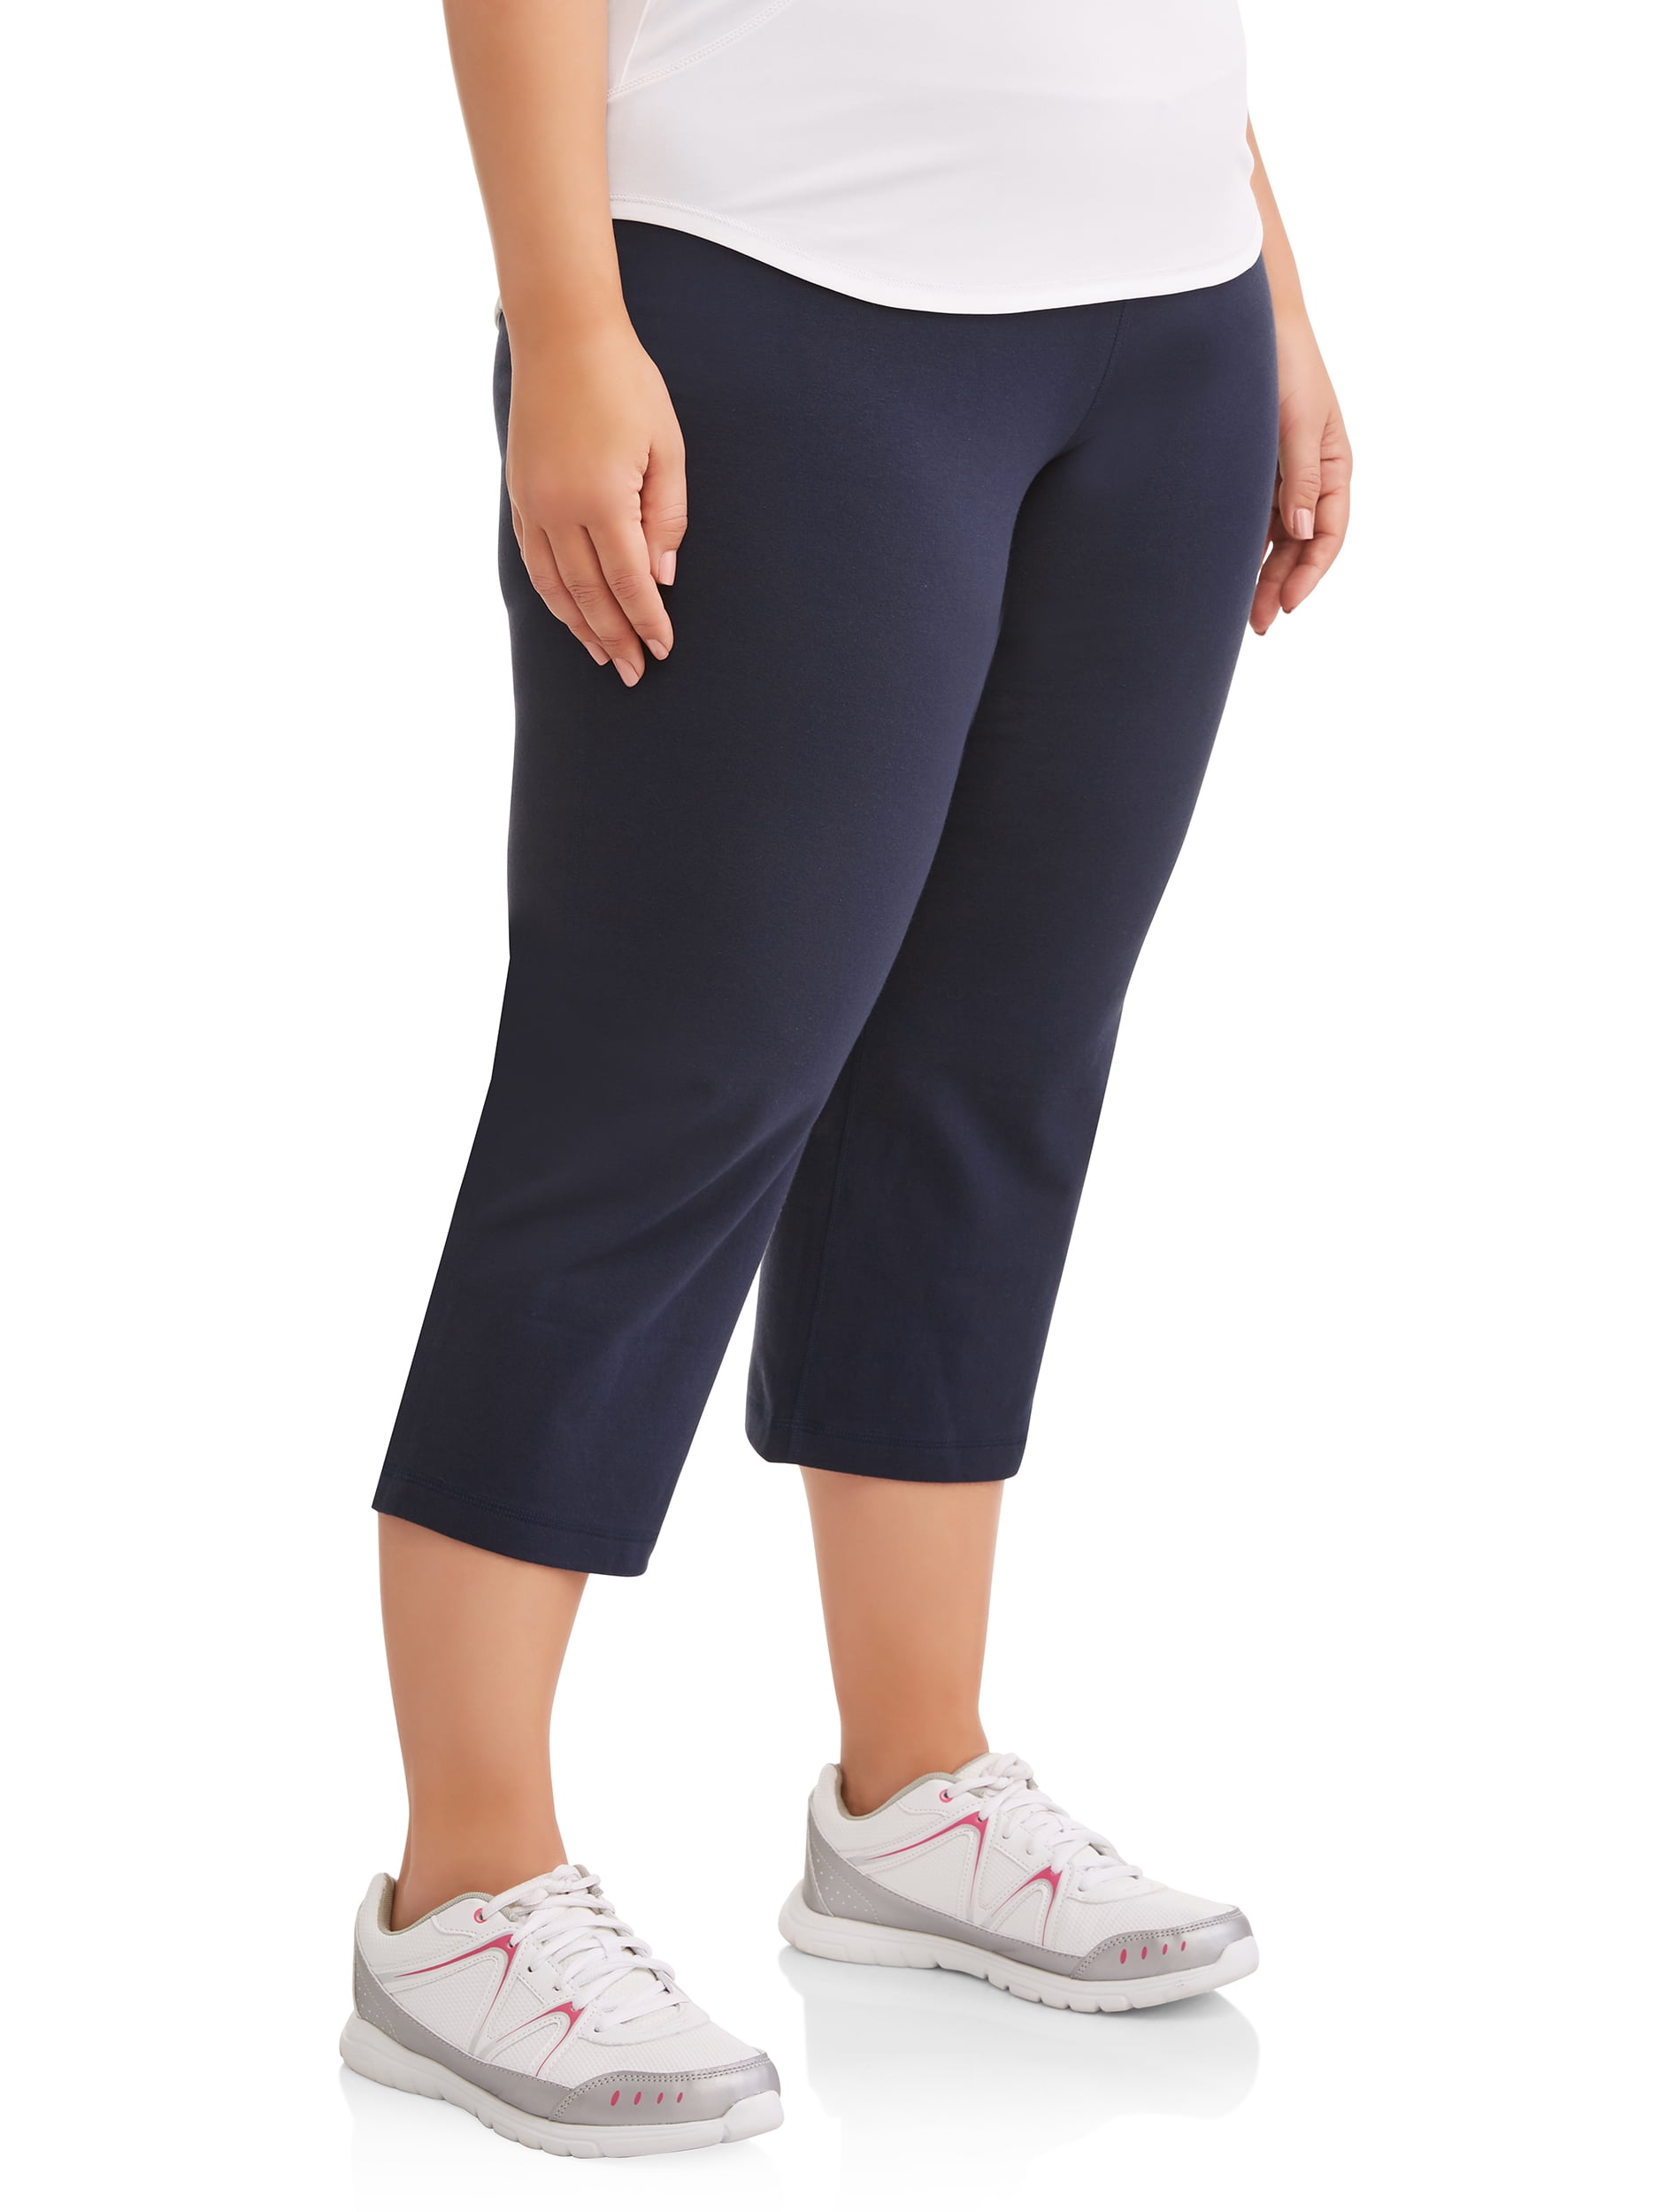 Women Plus Size Capris - Cotton Capri Pants - Grey, Ladies Cotton Capri,  महिलाओं की सूती कैपरी, वूमेन कॉटन कैपरी - Tanya Enterprises, Ludhiana | ID:  2852249777297